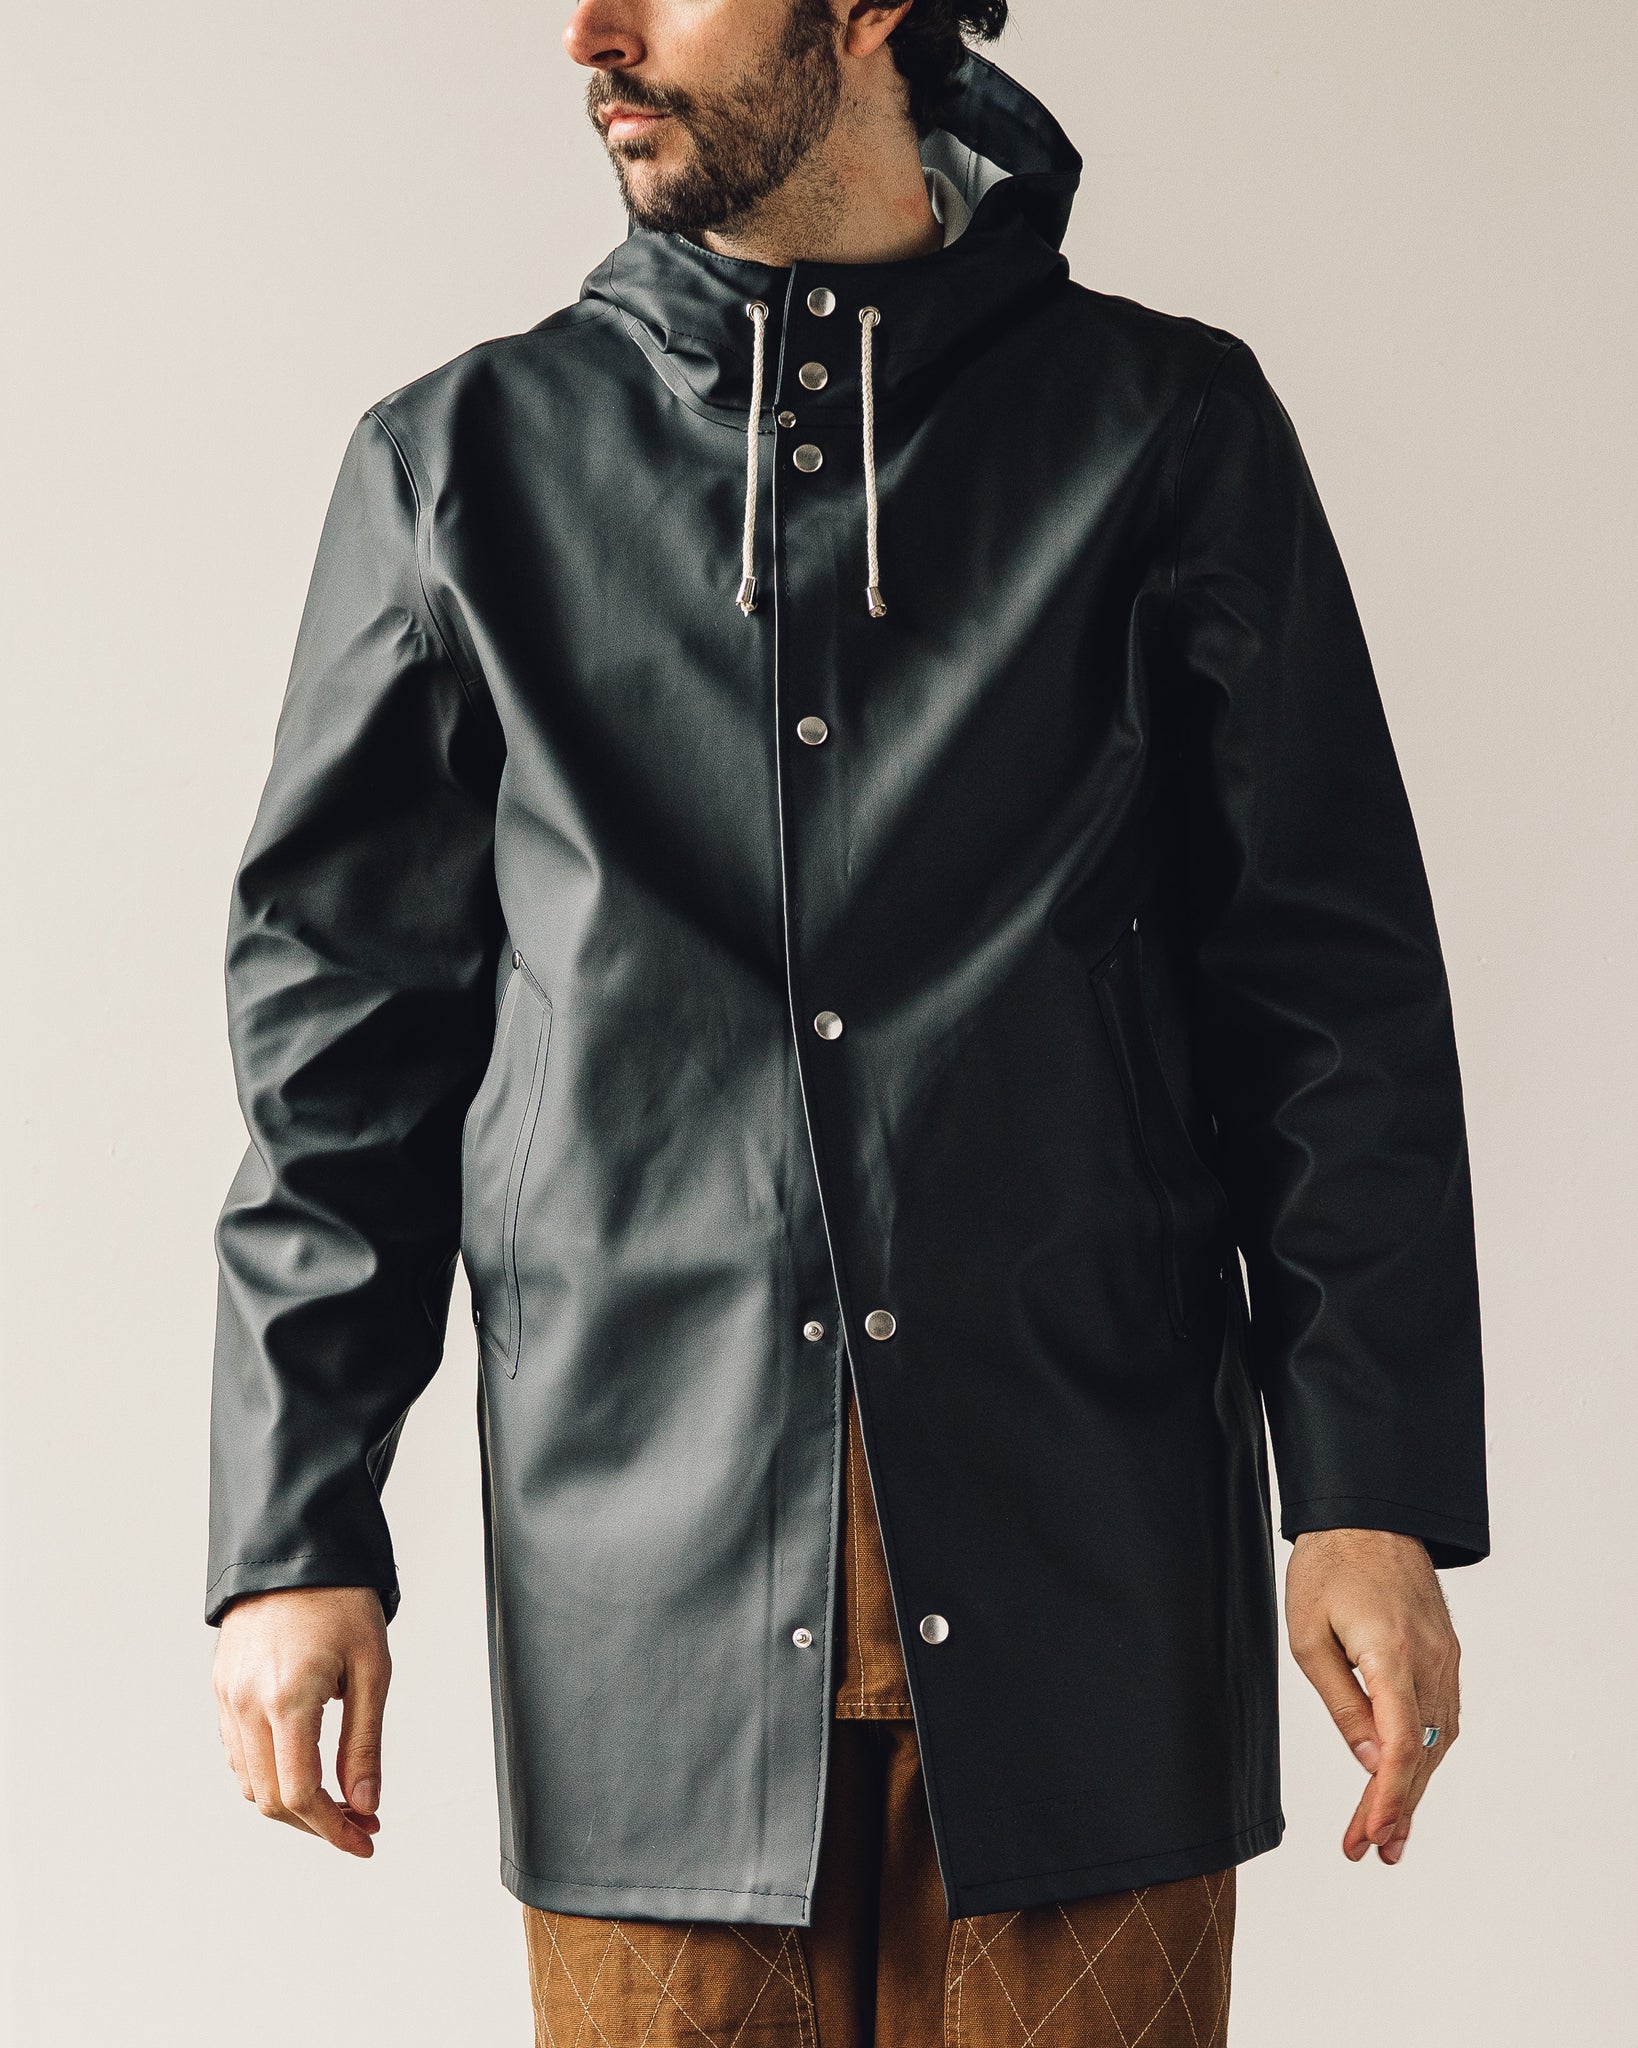 Stutterheim Stockholm Raincoat in Black | Glasswing Shop | Glasswing